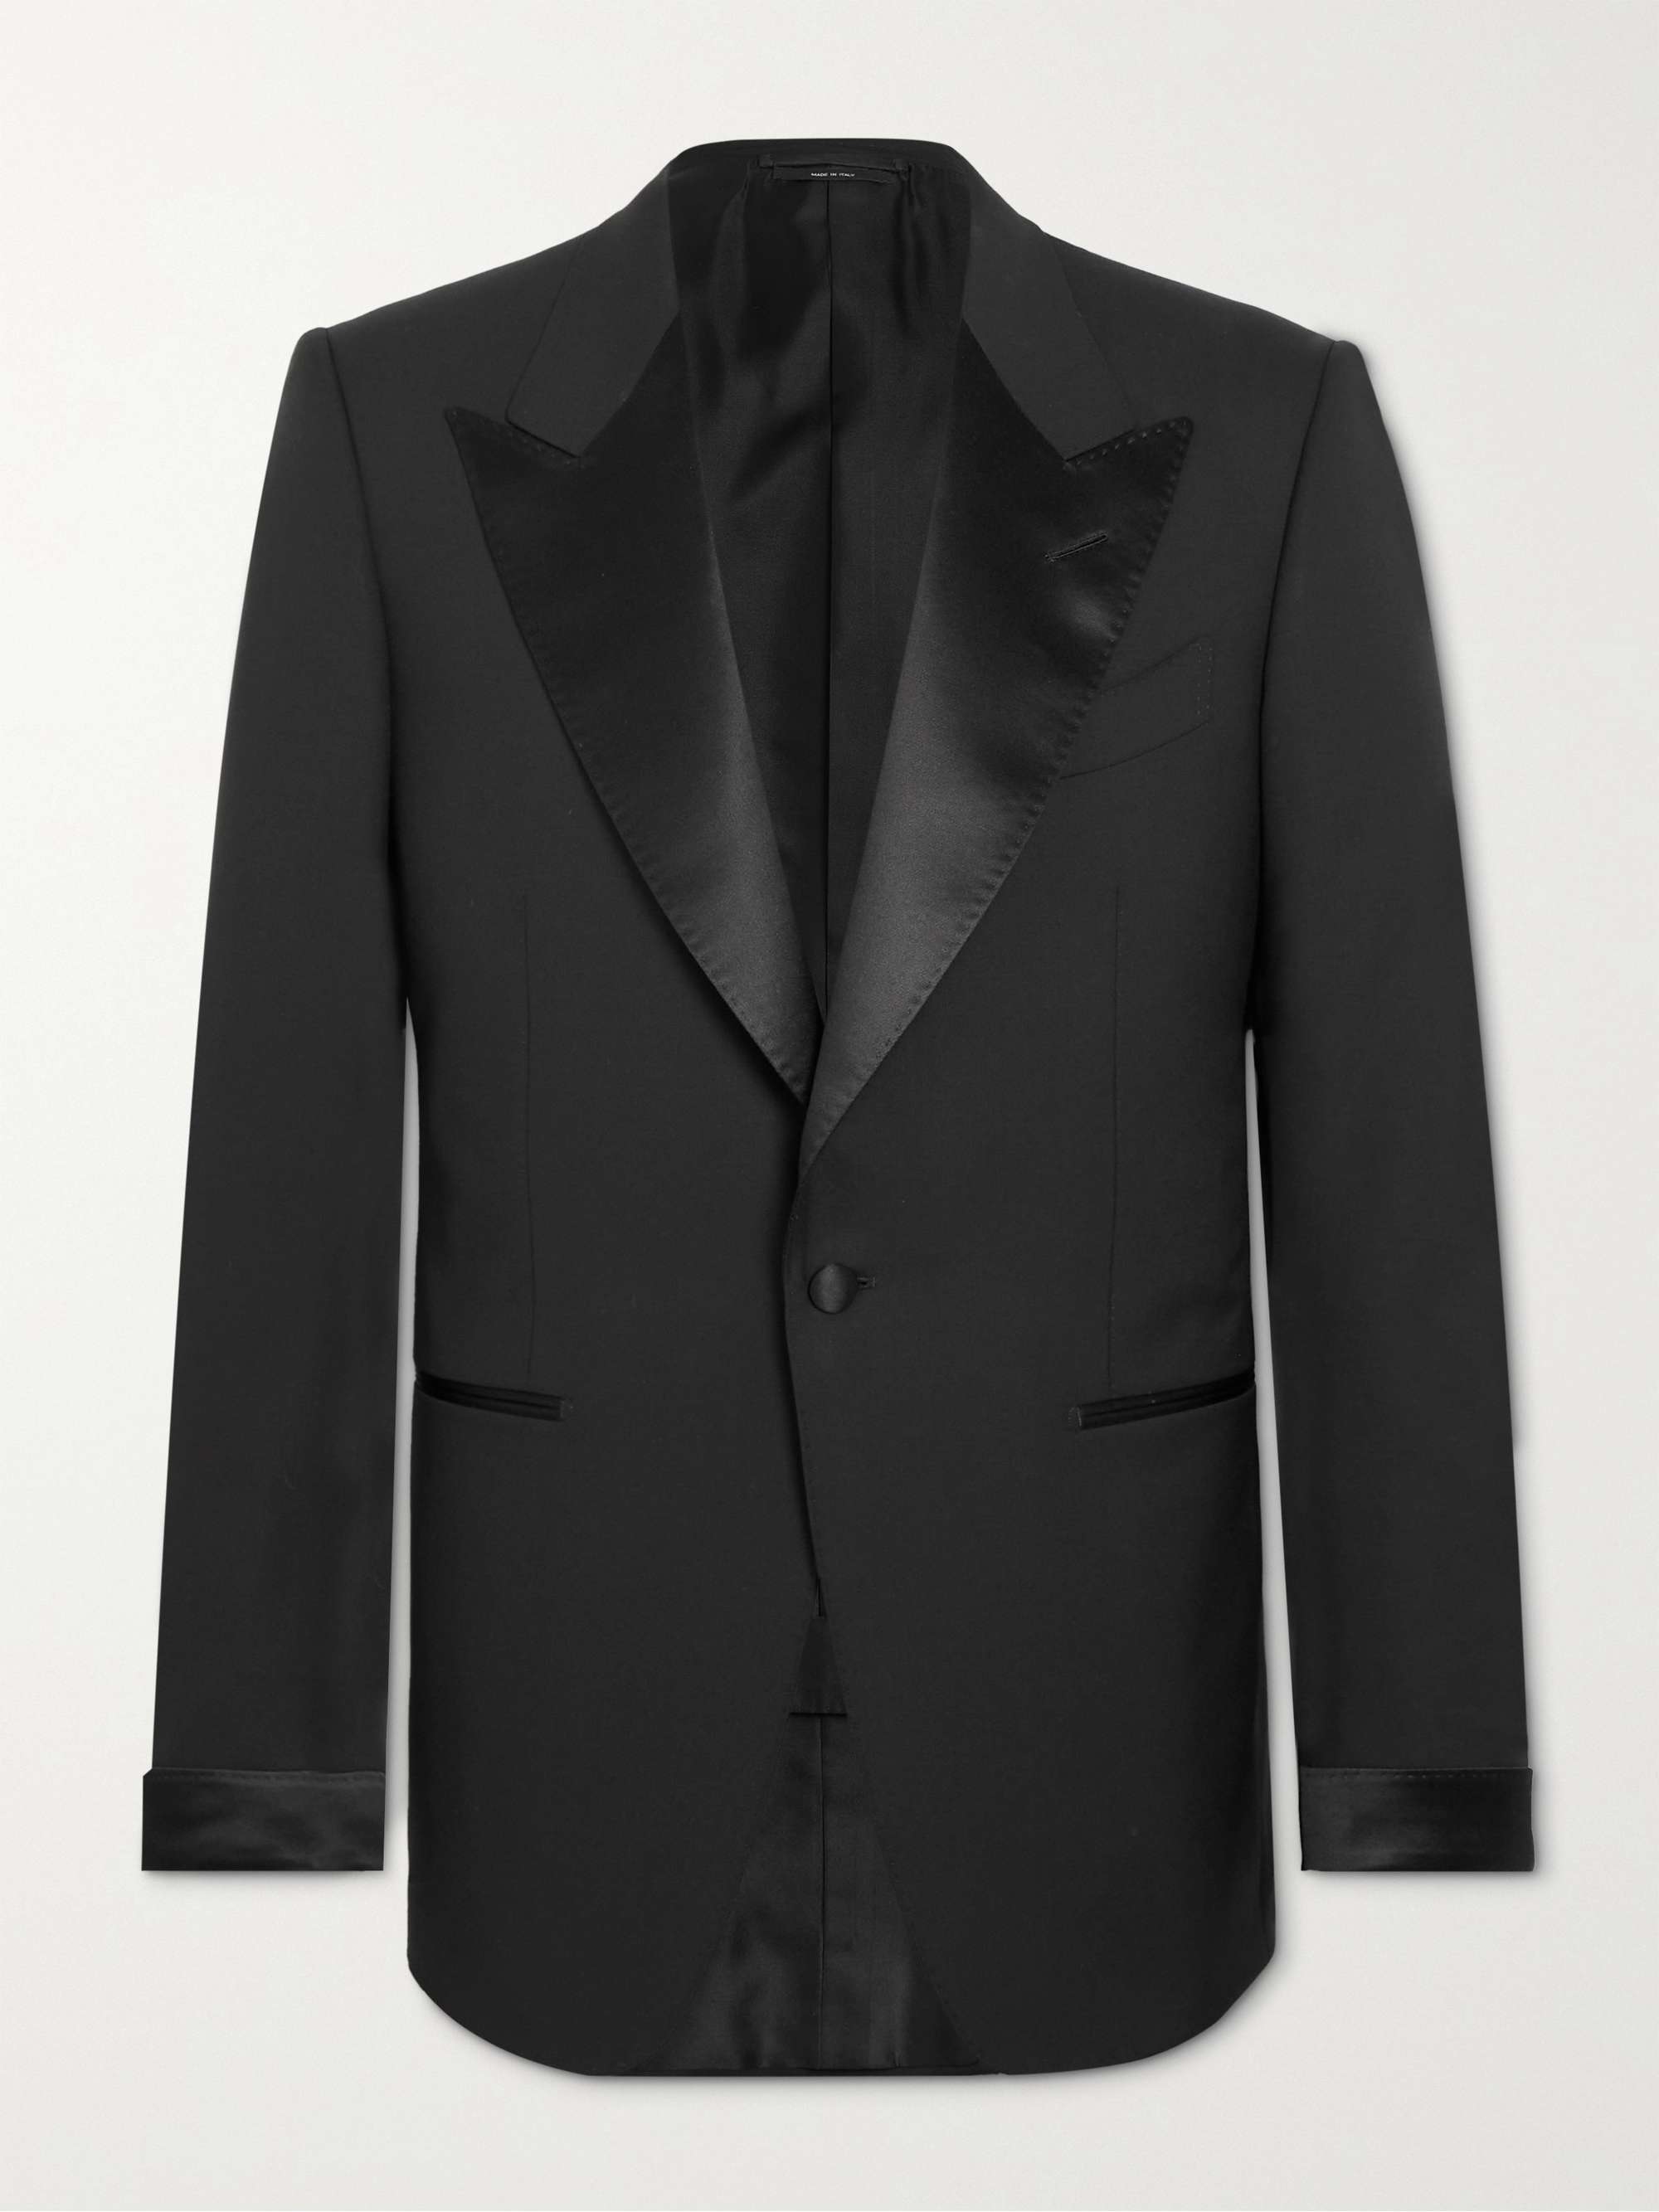 TOM FORD Shelton Slim-Fit Satin-Trimmed Wool Tuxedo Jacket